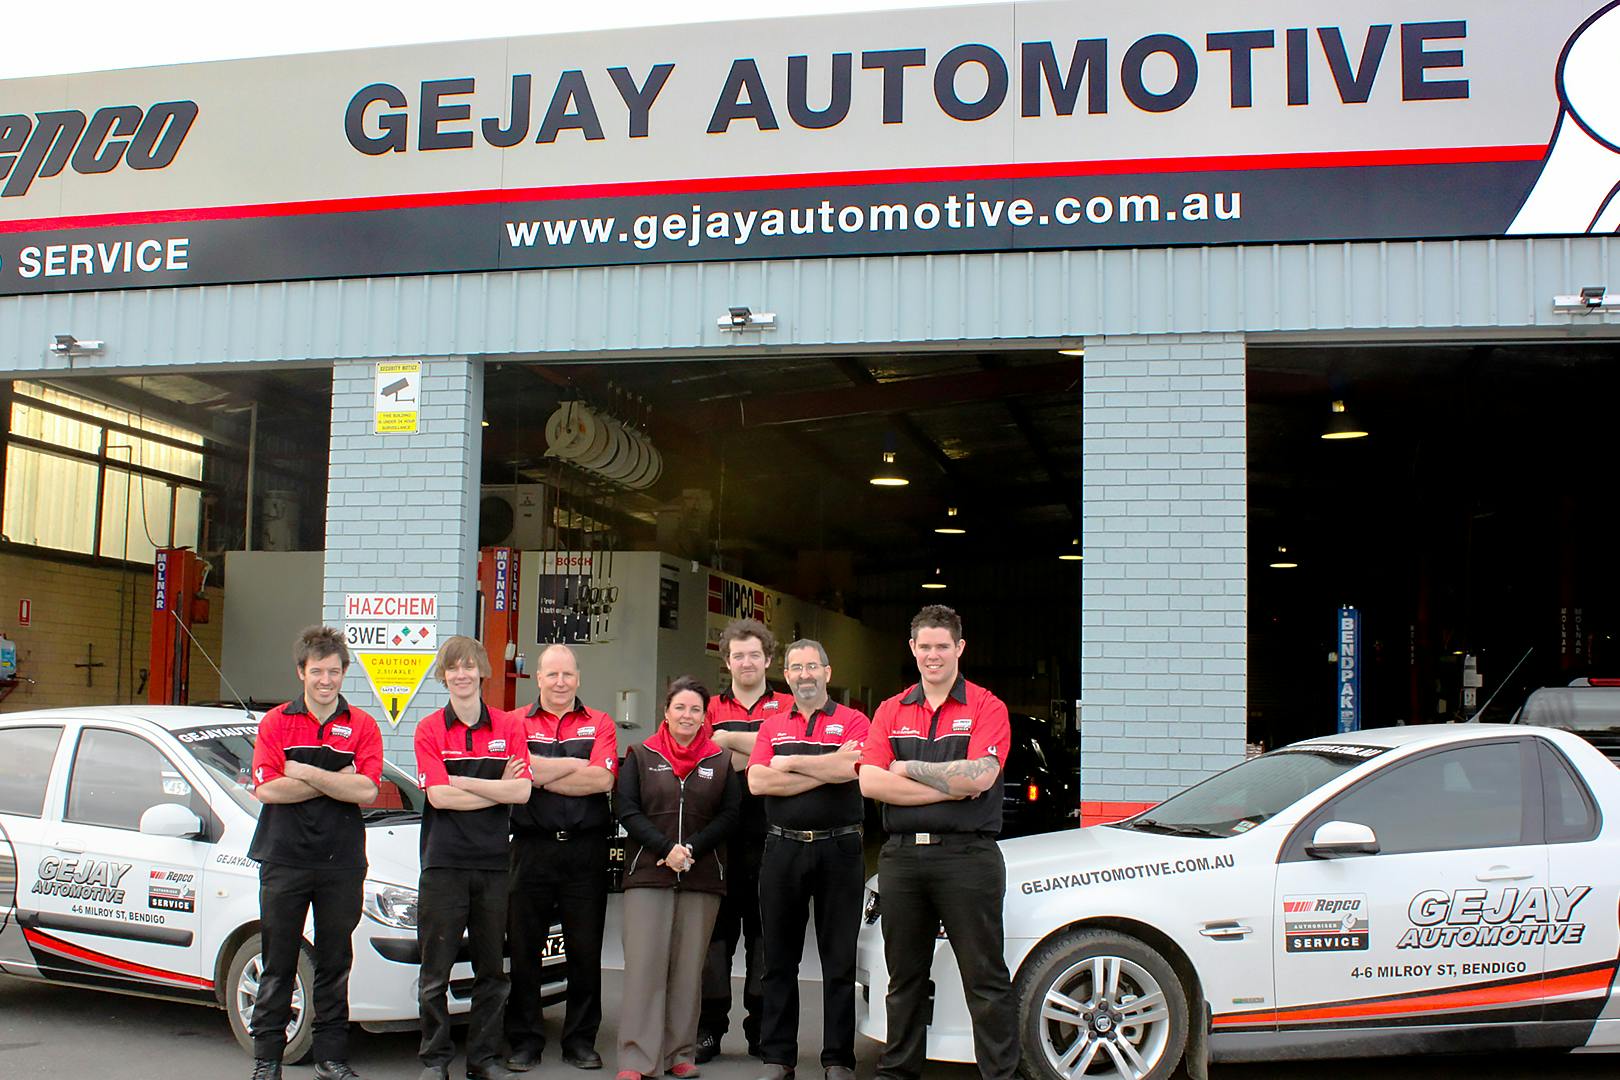 Gejay Automotive profile photo